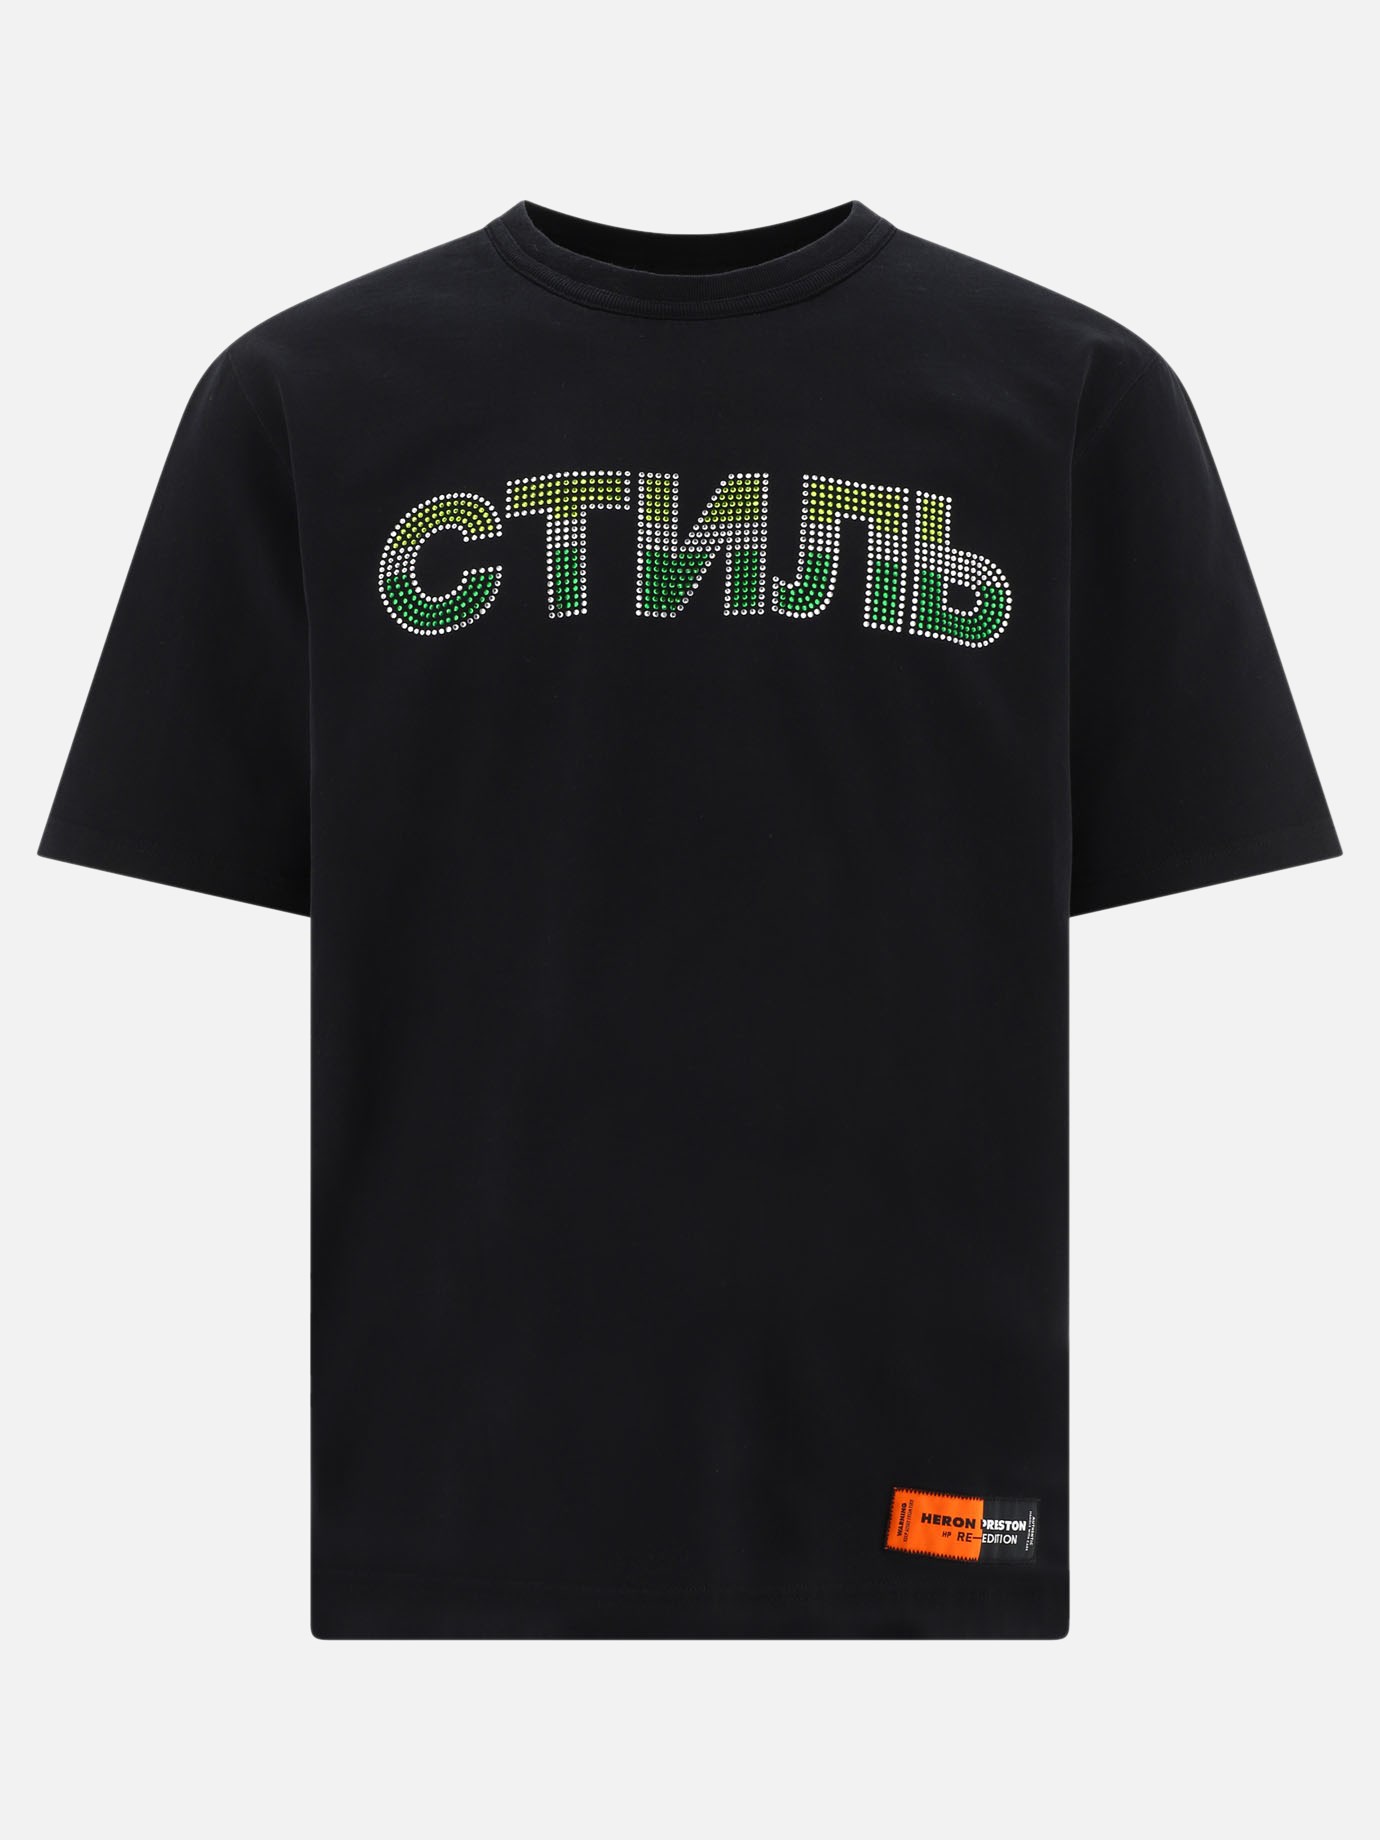  CTNMB Strass  t-shirtby Heron Preston - 3